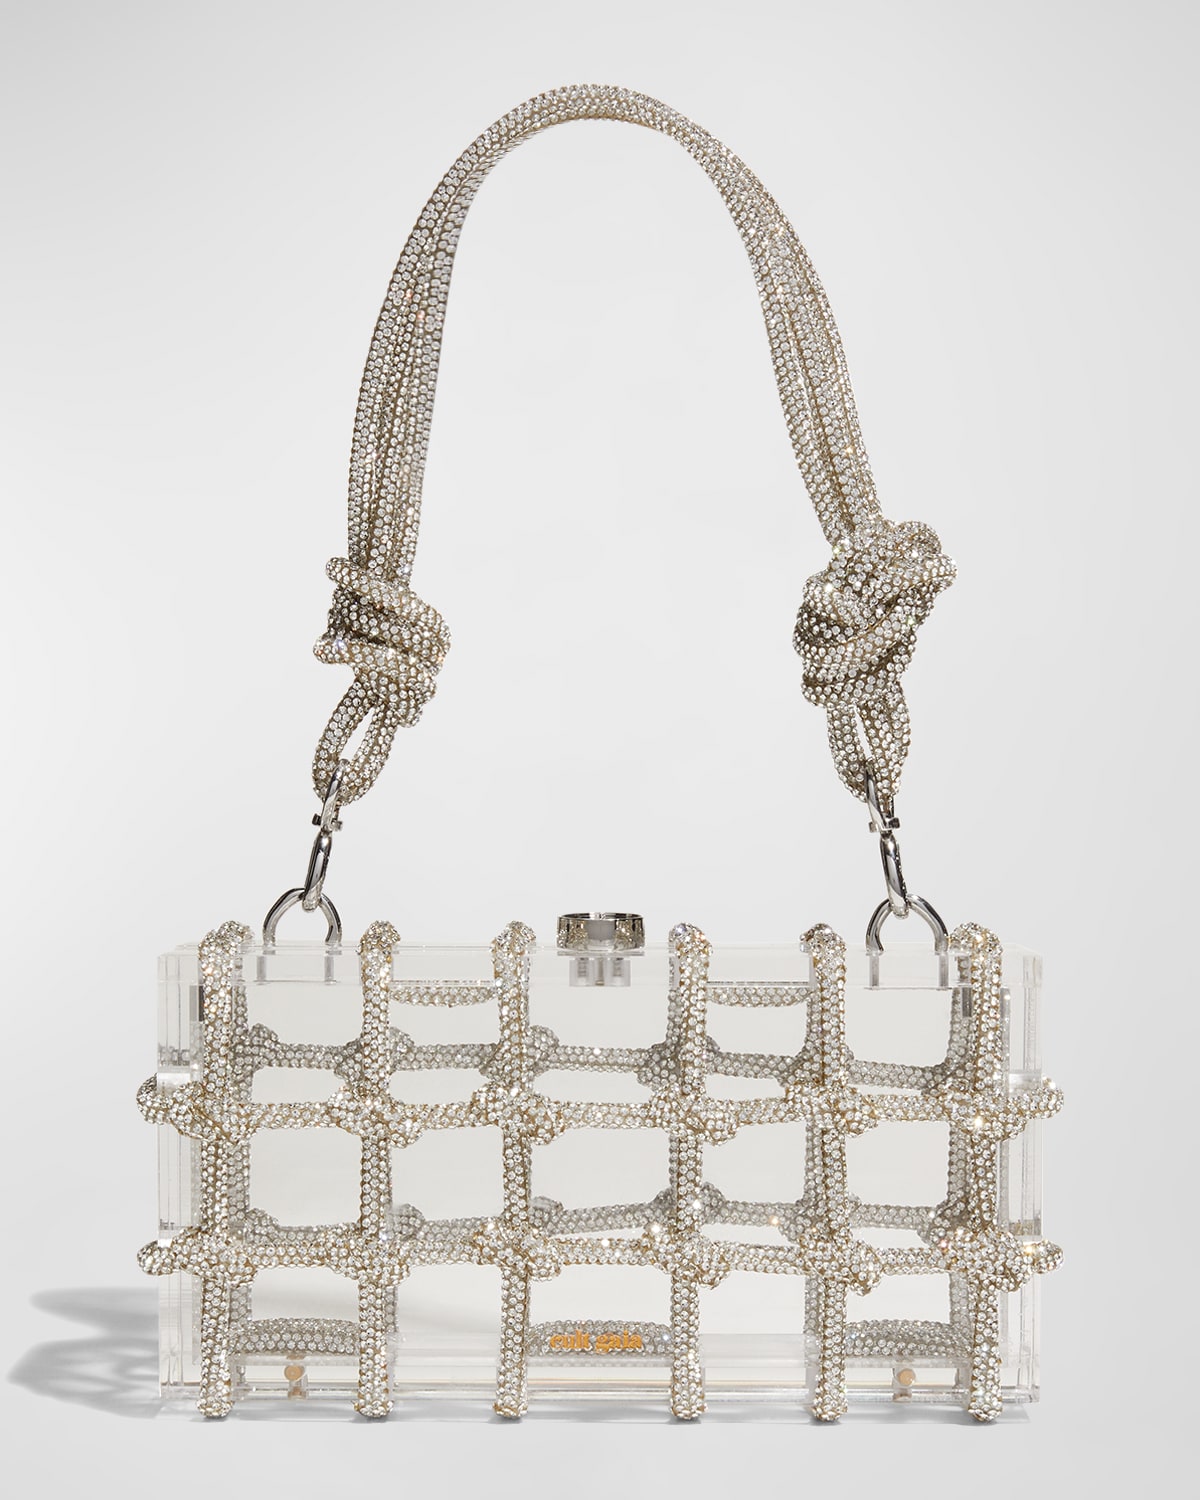 Cult Gaia Hajar Acrylic Chain Shoulder Bag